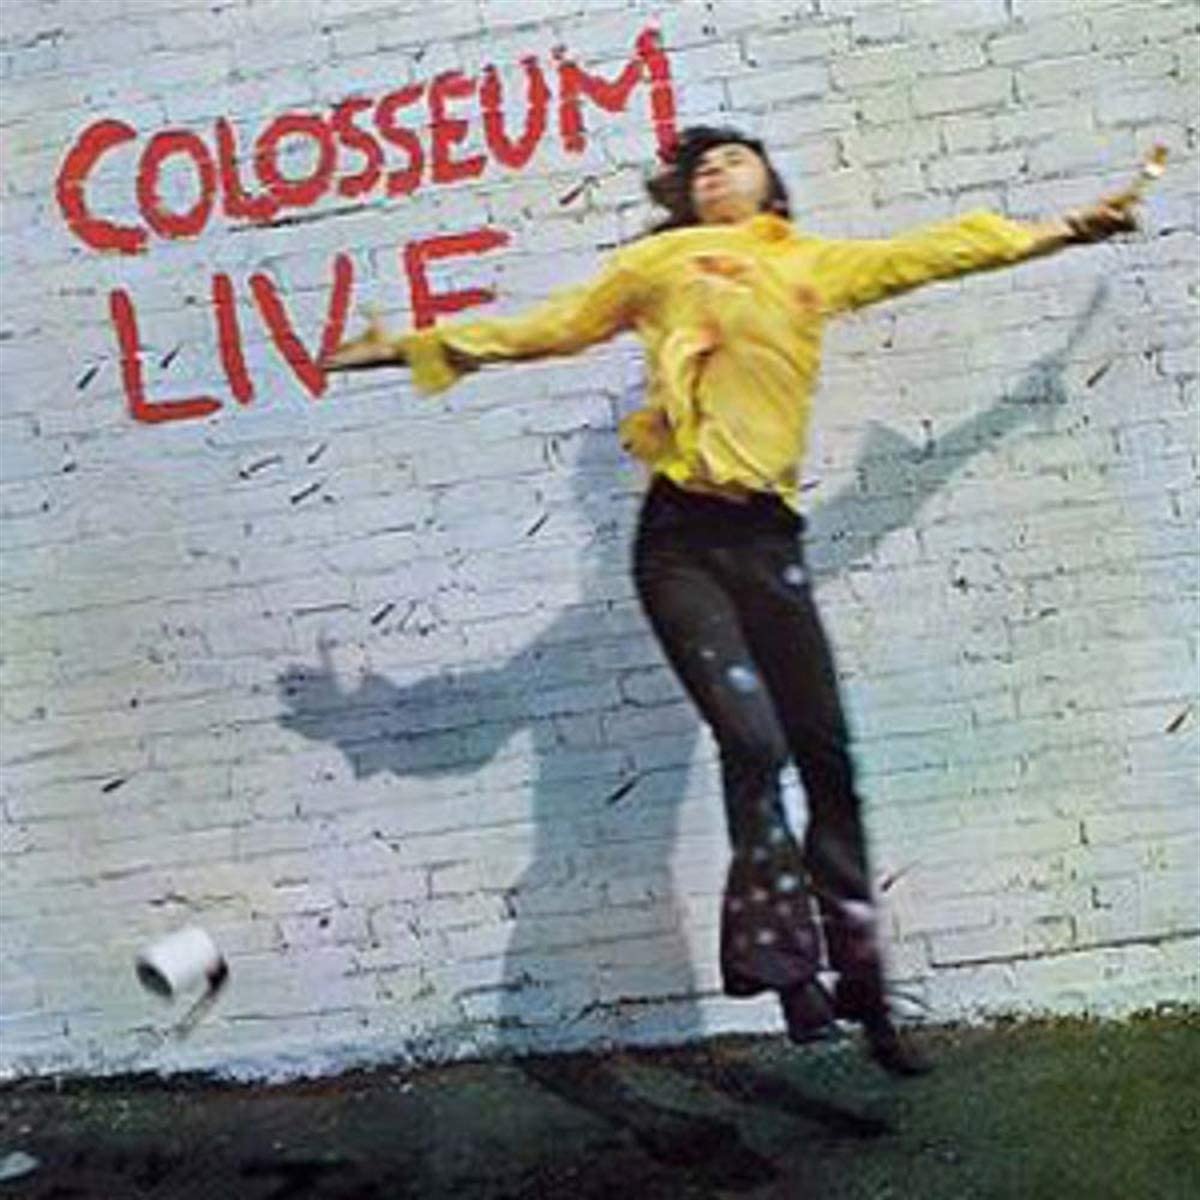 Colosseum Live recensione album